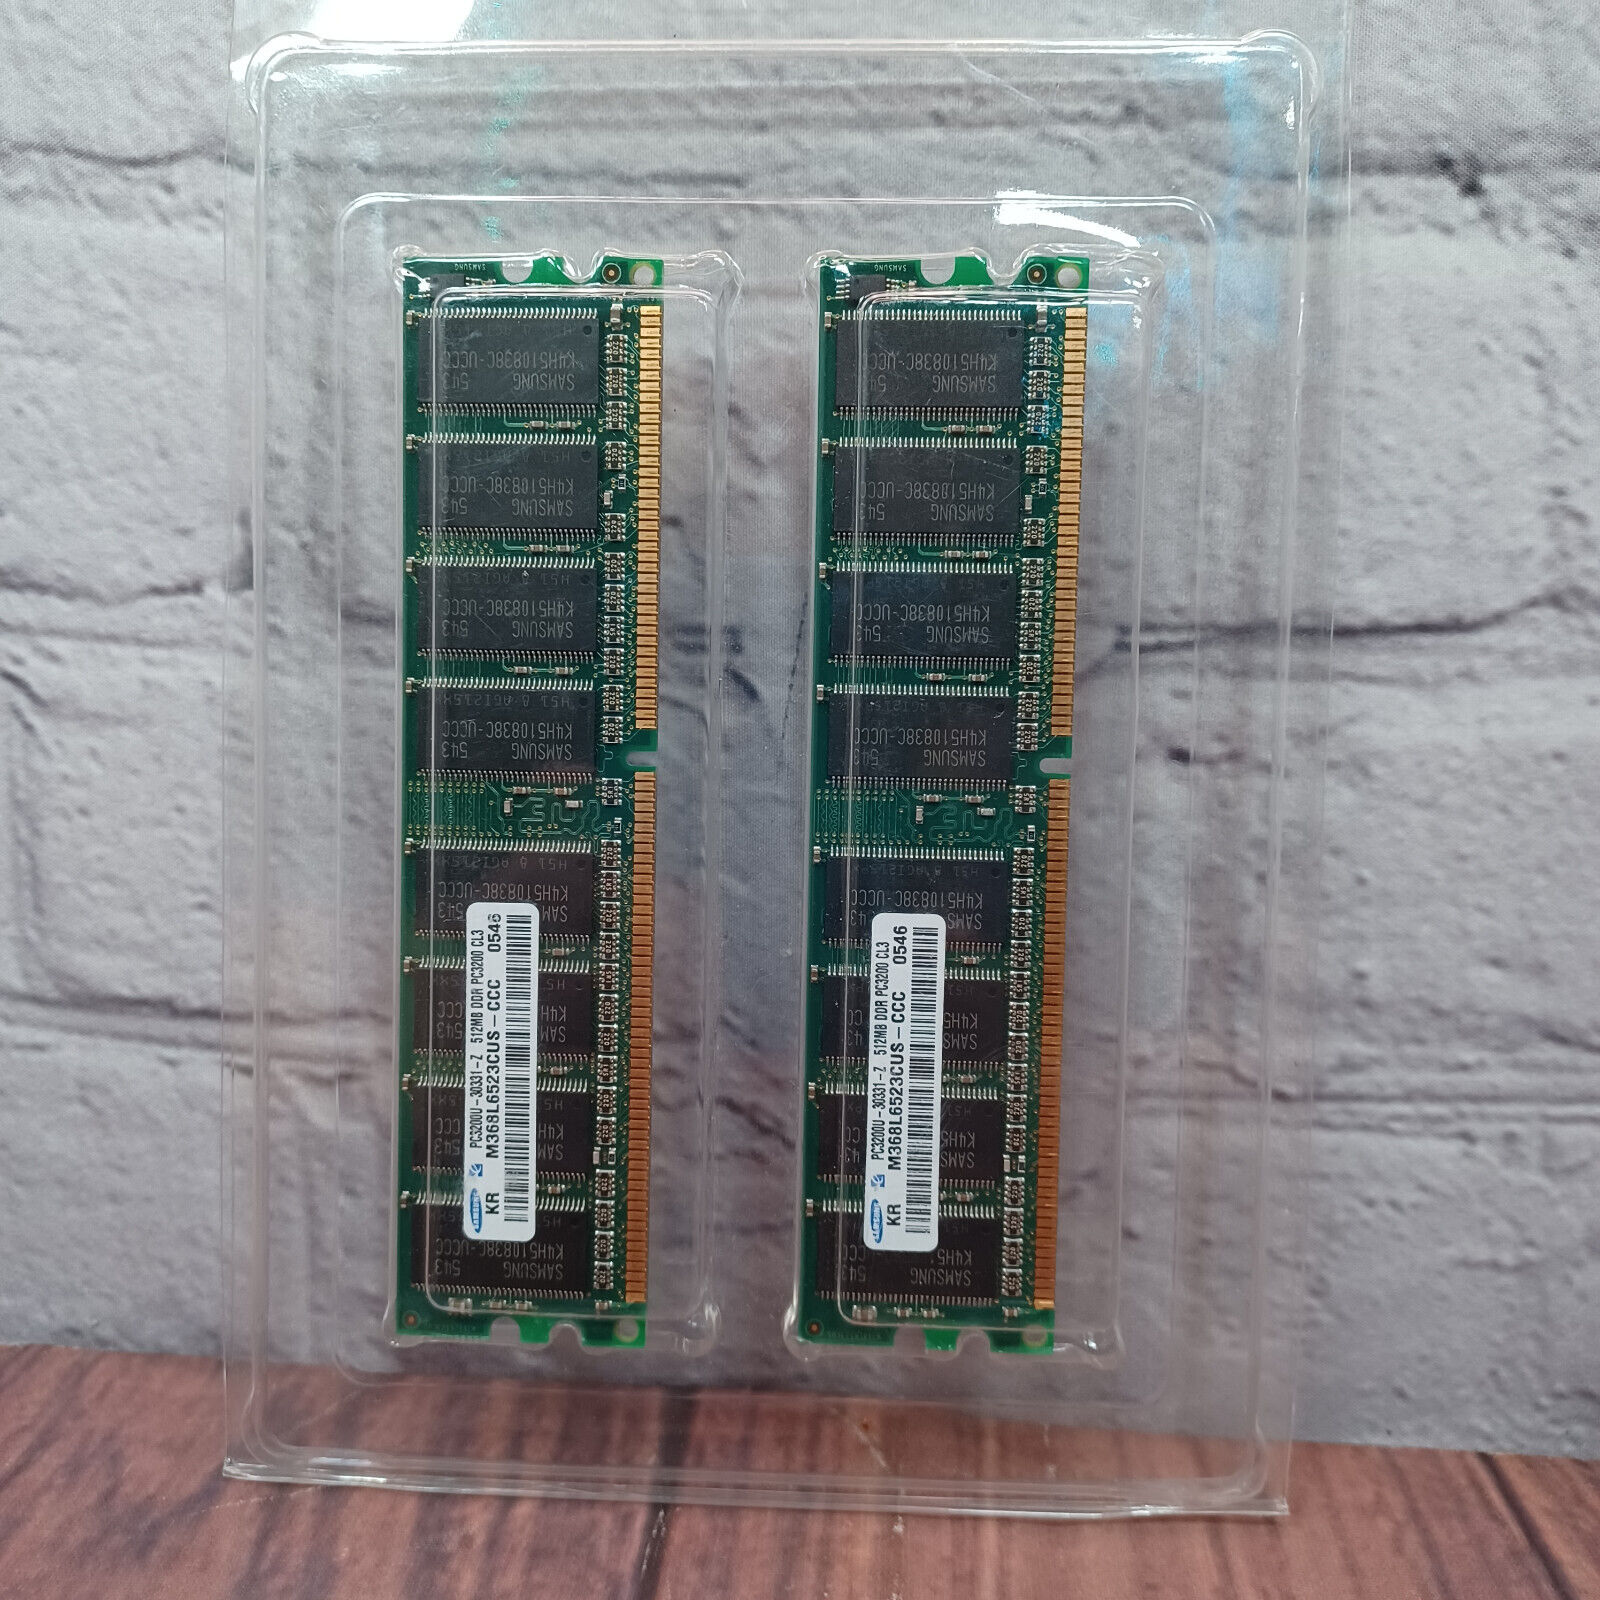 Samsung PC3200U 512MB DDR Ram - 2 Memory Sticks CL3 - Vintage Computing